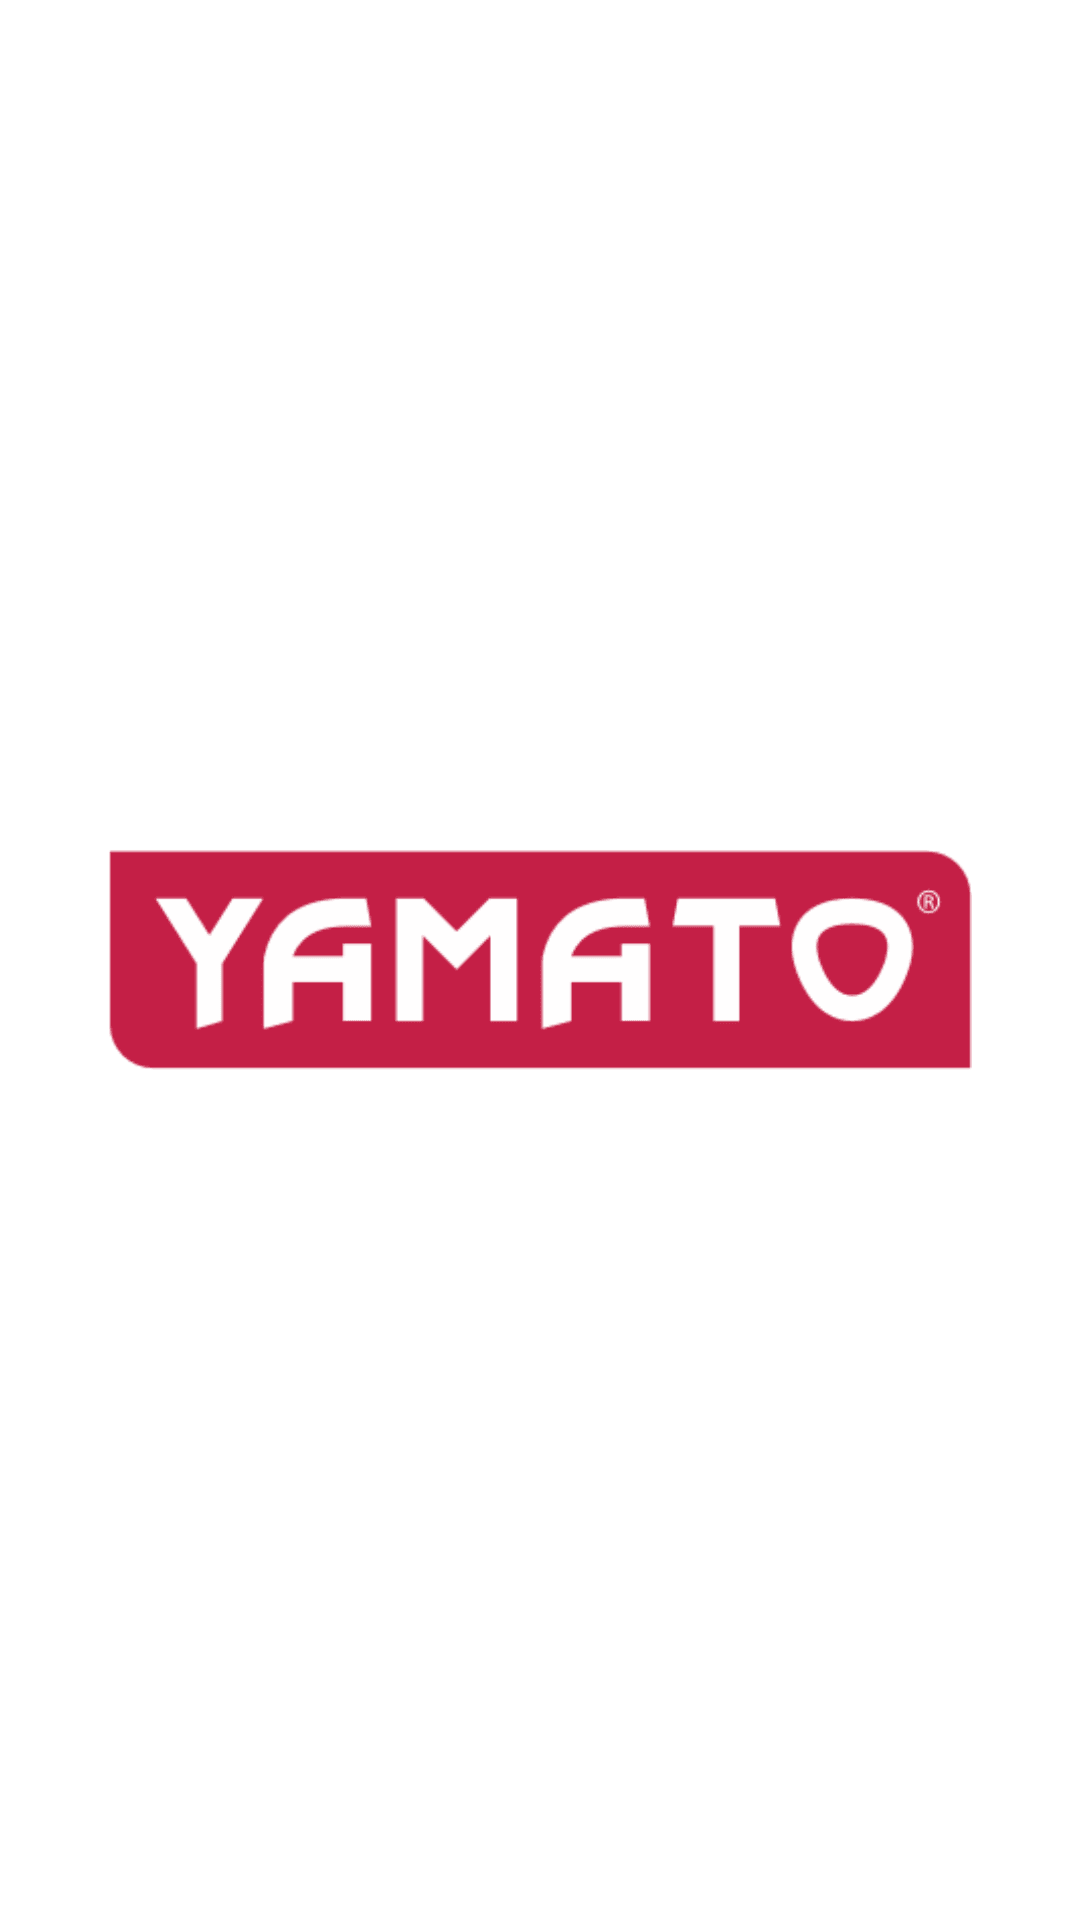 Yamato - Levigatrice orbitale palmare elettrica 260W mm.110x100 Yamato